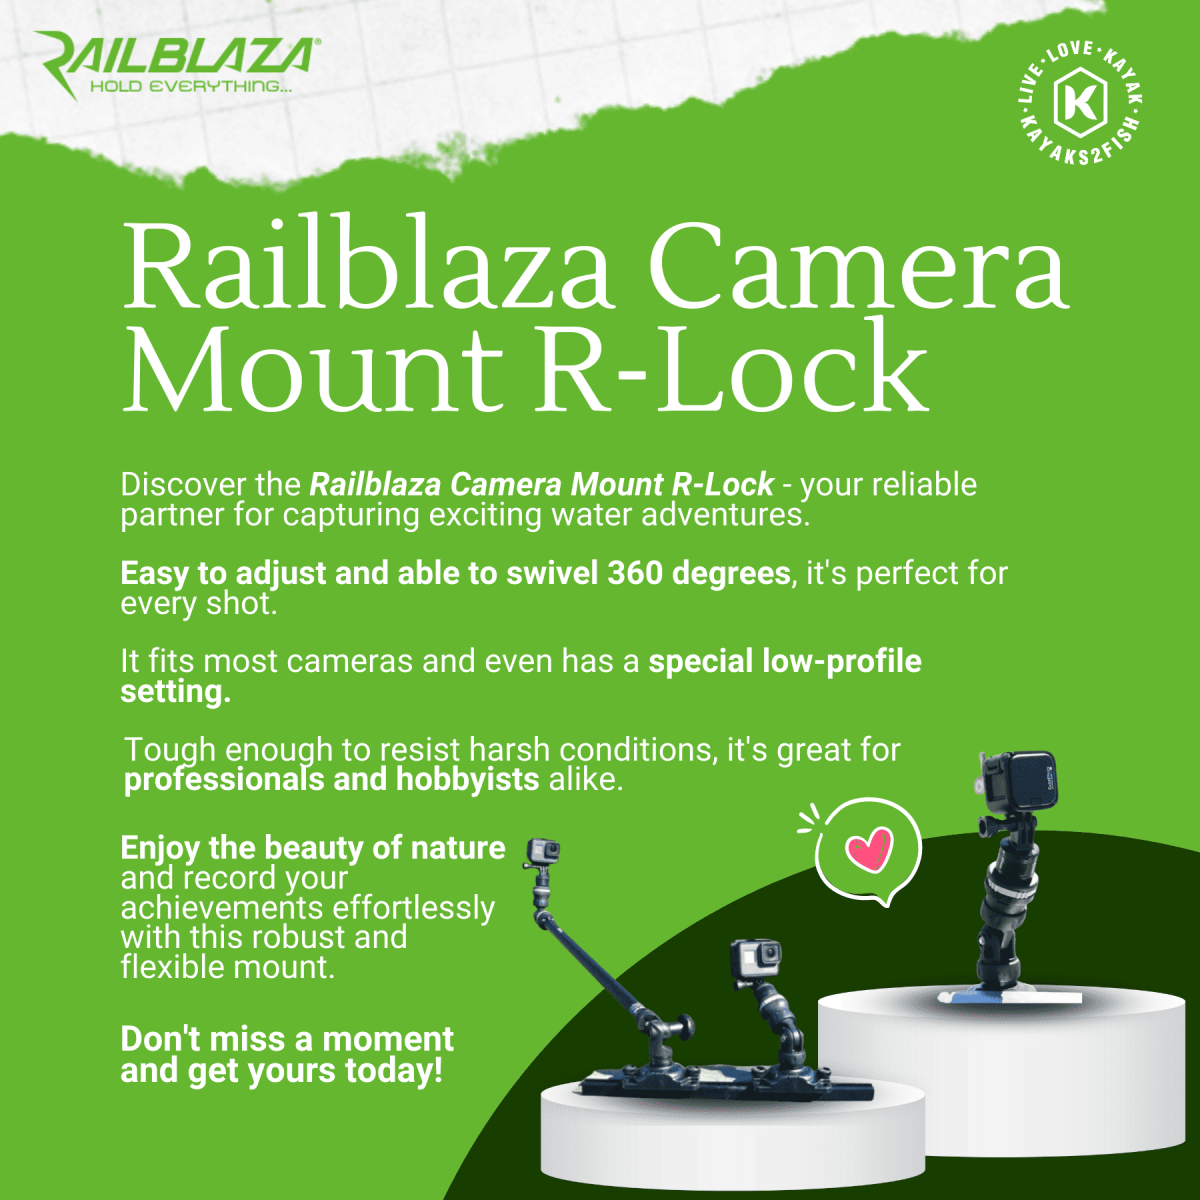 Railblaza Camera Mount R-Lock